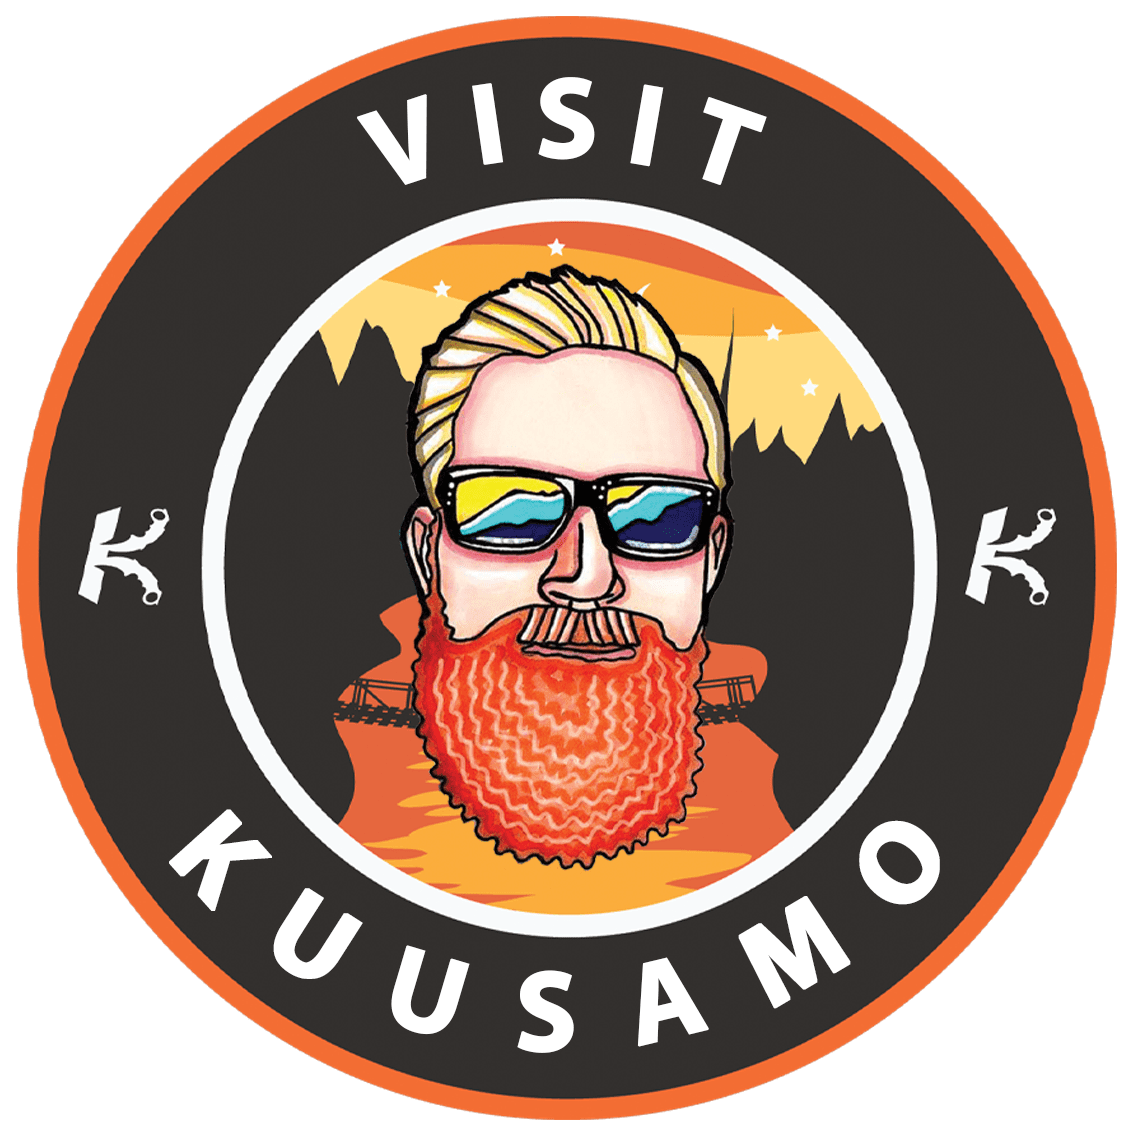 VISIT KUUSAMO CS:GO Twitch profile picture